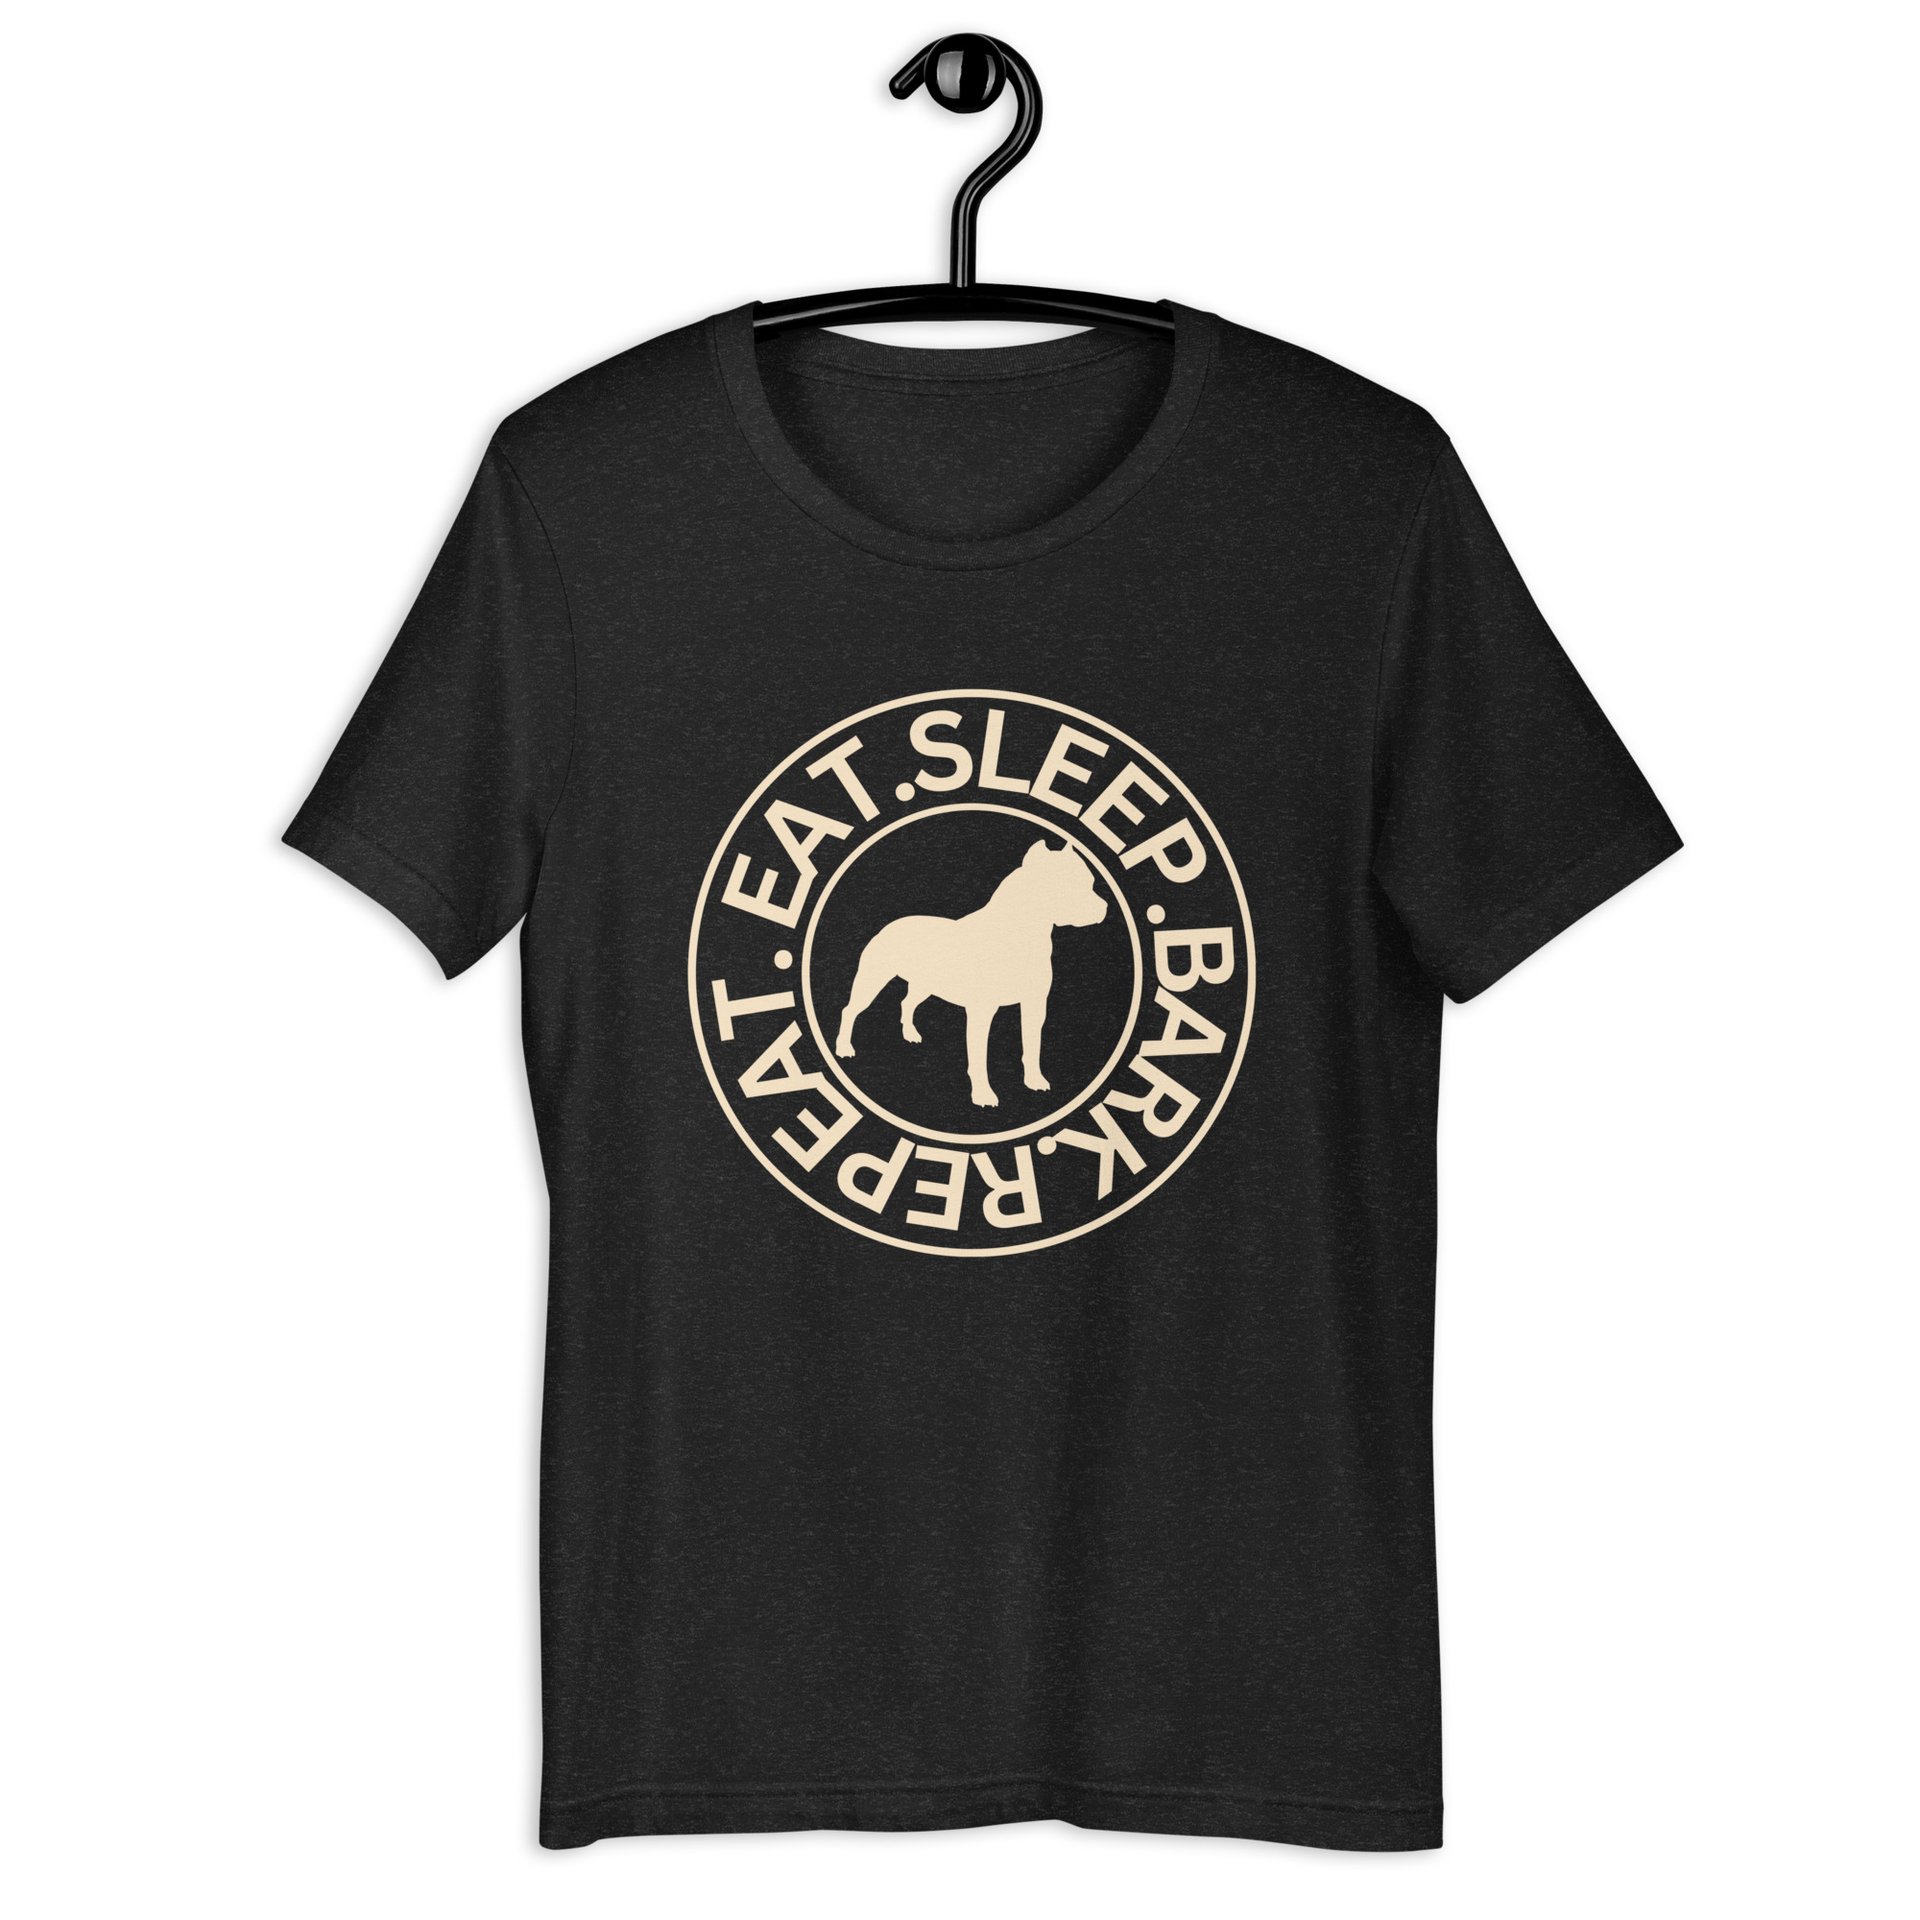 Eat Sleep Bark Repeat Toy Bulldog Unisex T-Shirt. Black Heather